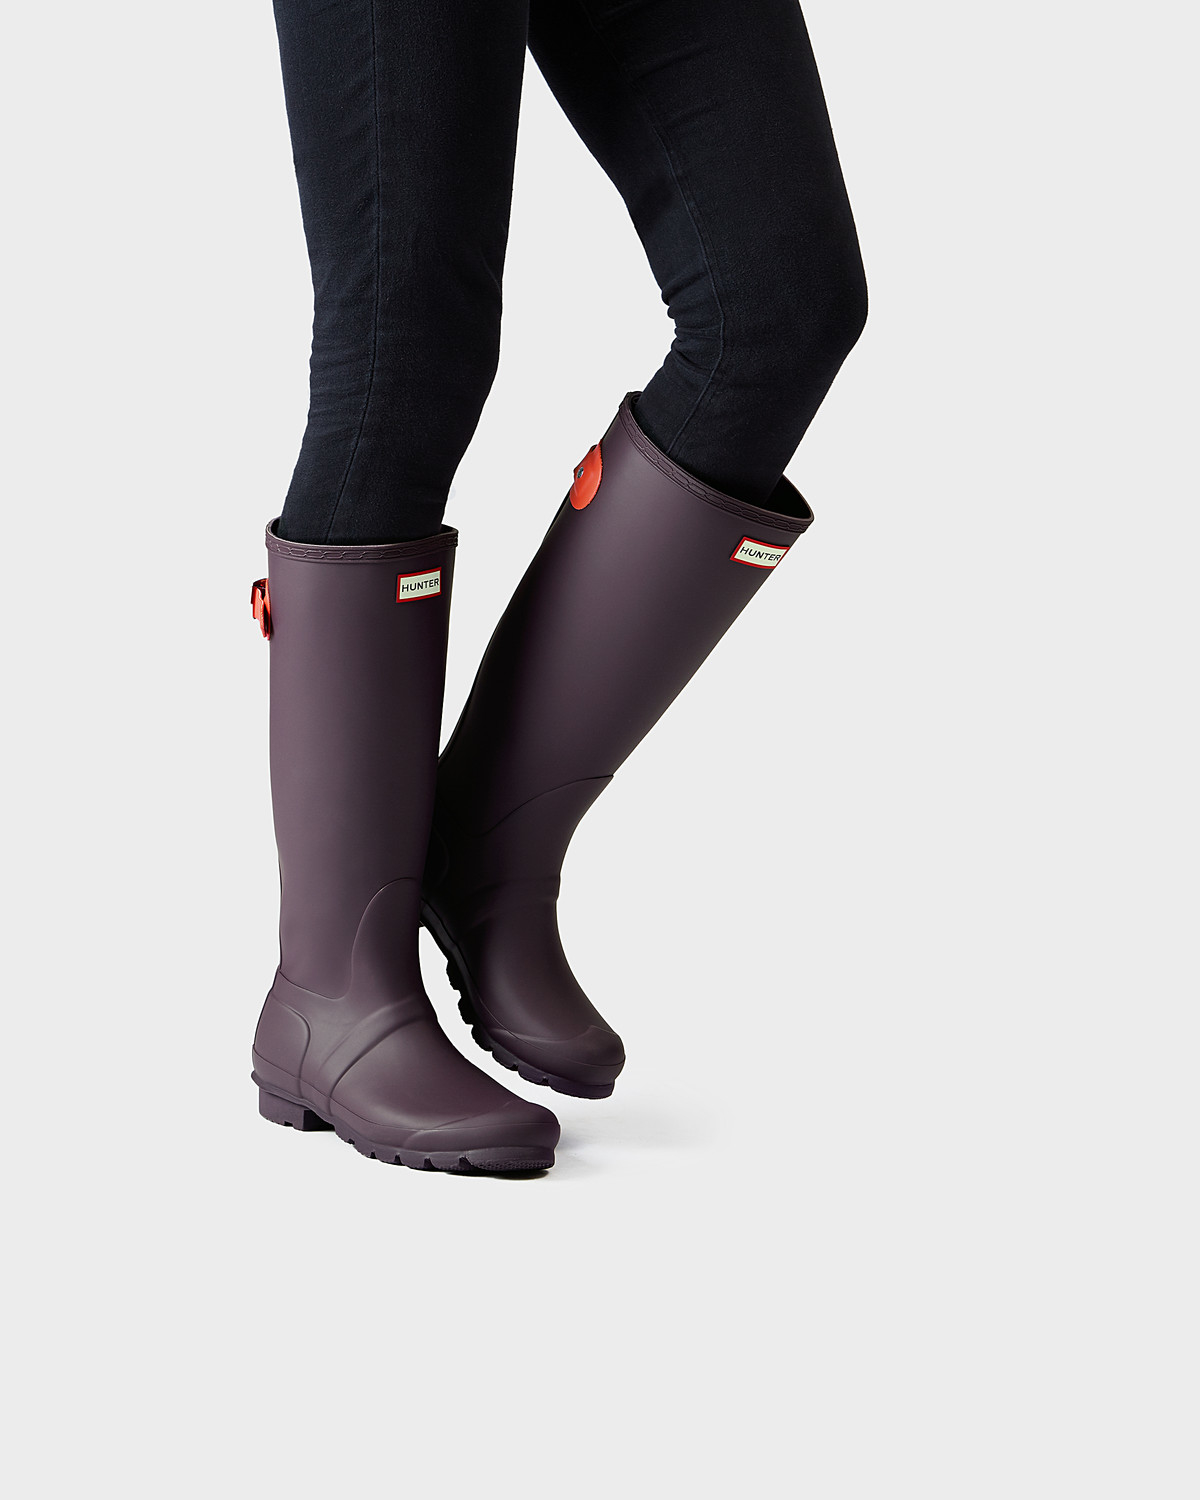 hunter women's original tall back adjustable wellington boots